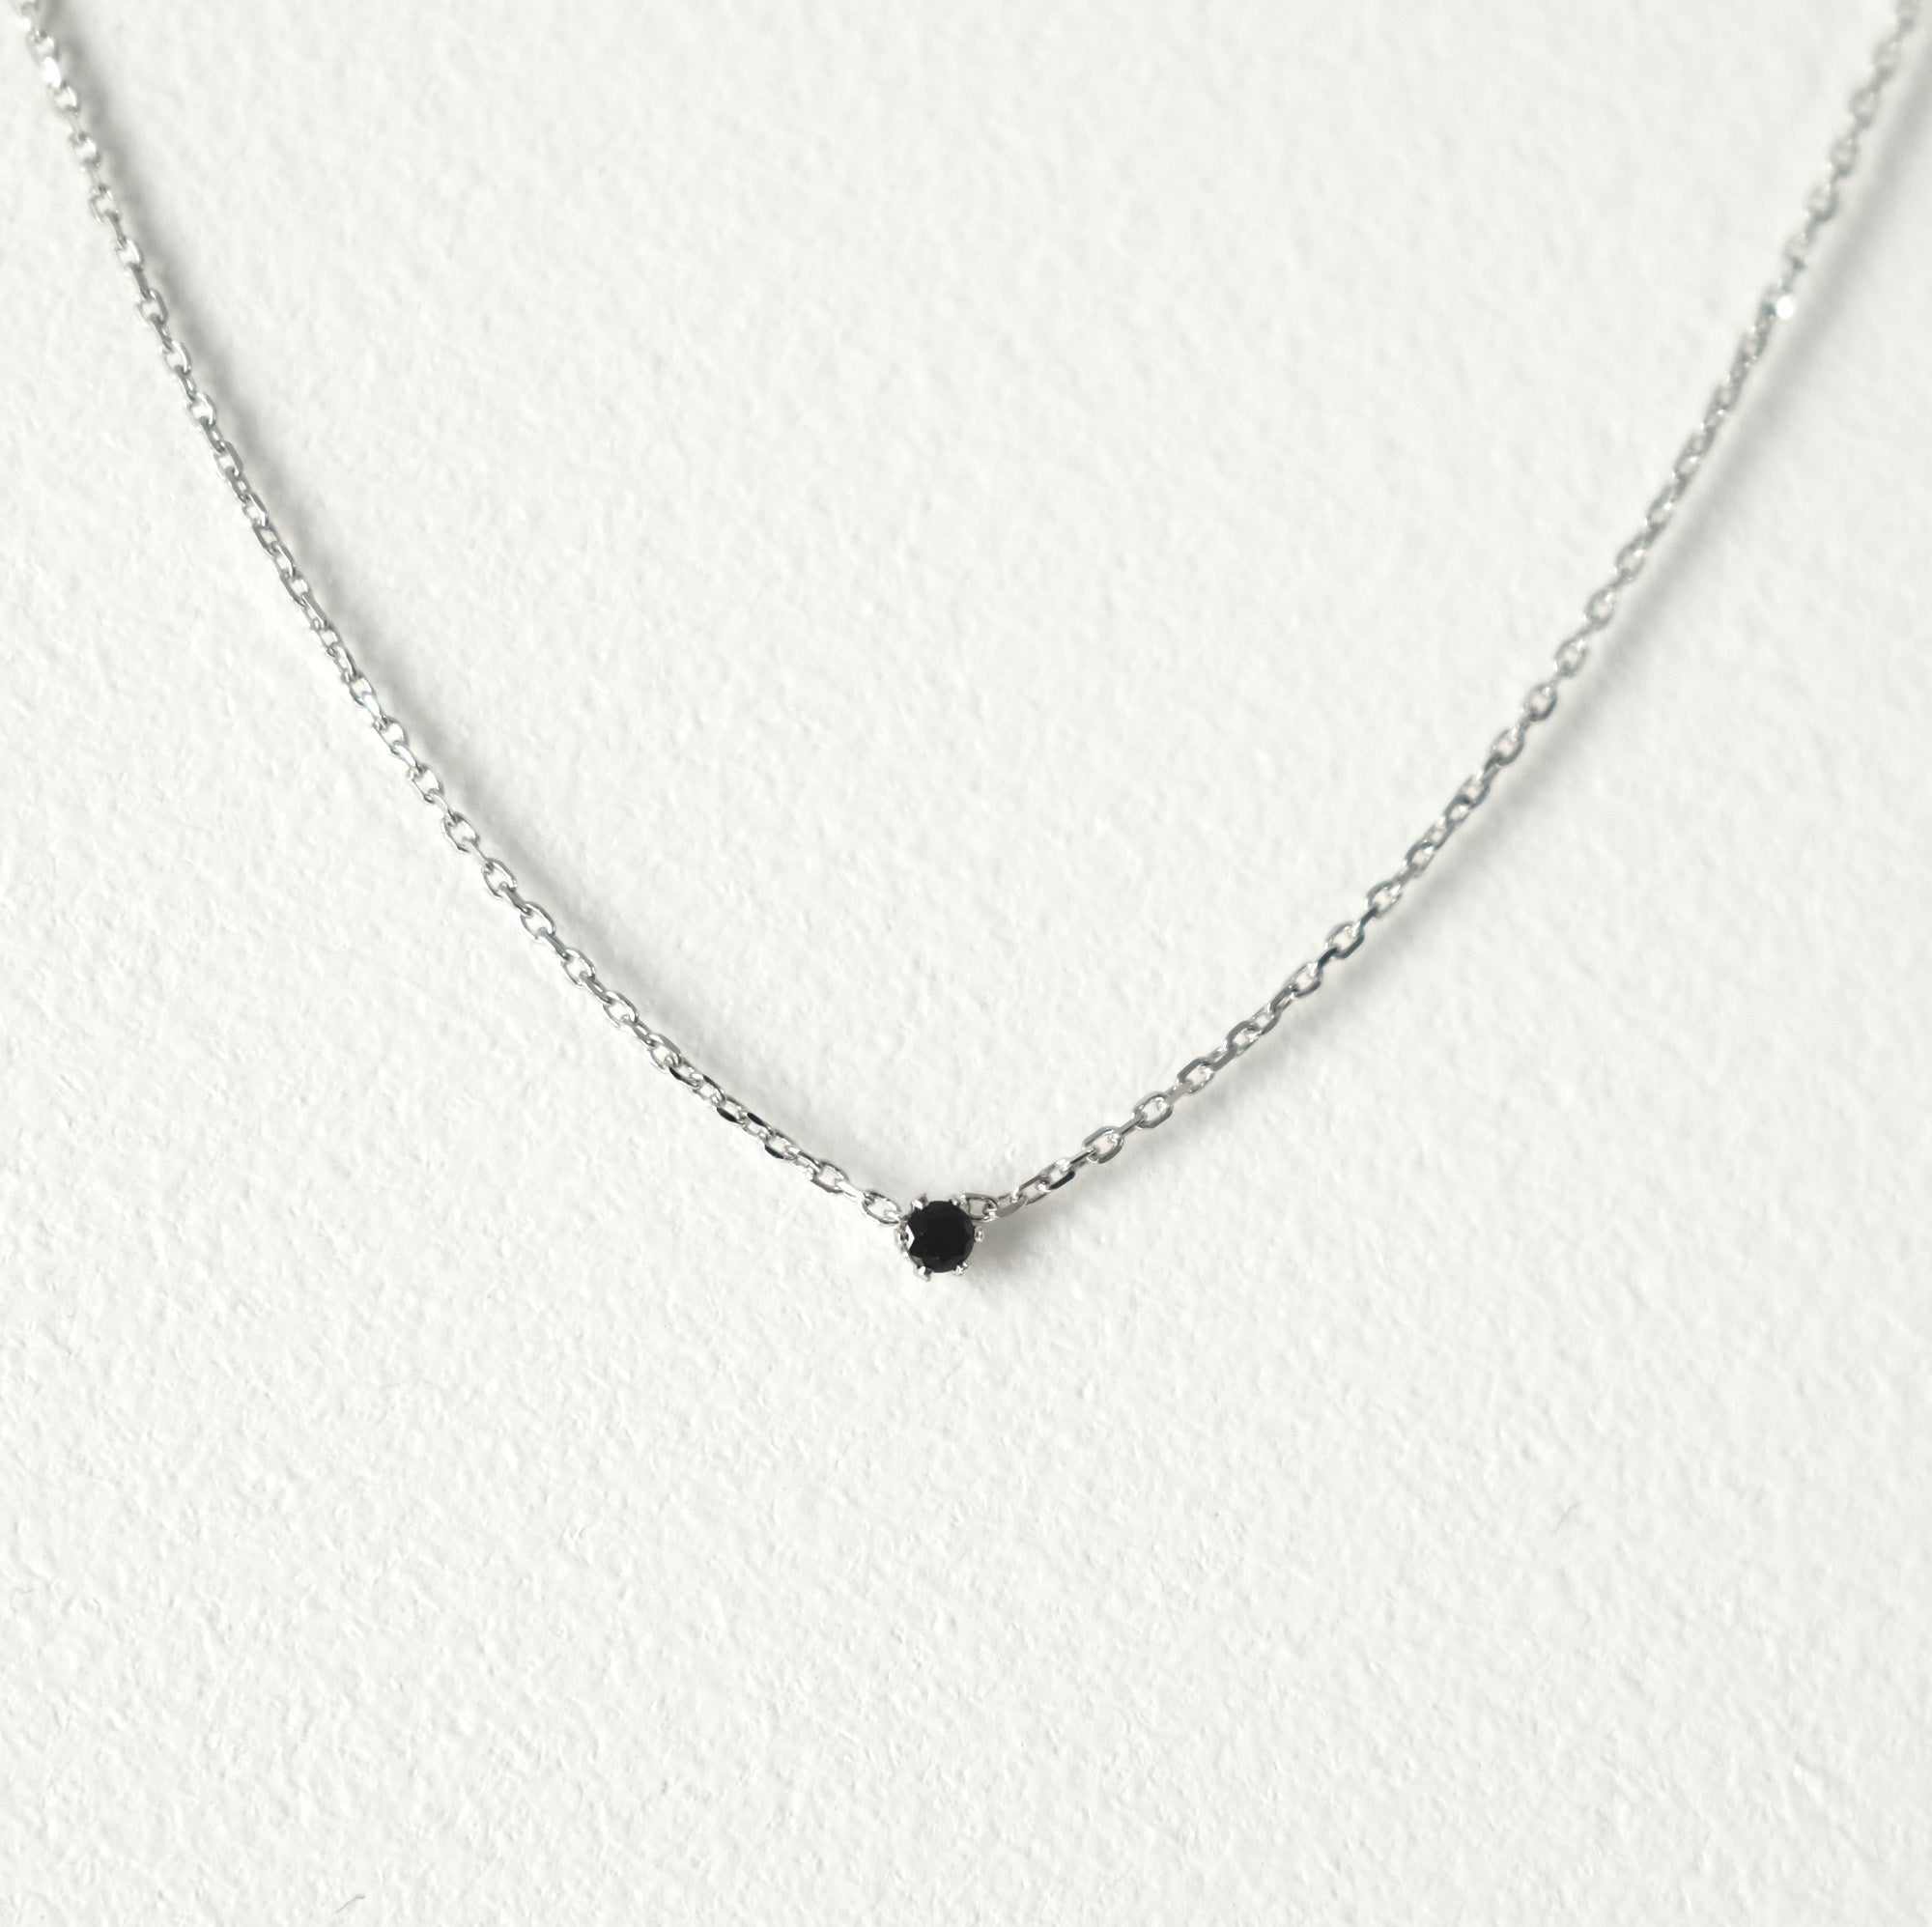 Petite Black Crystal Necklace